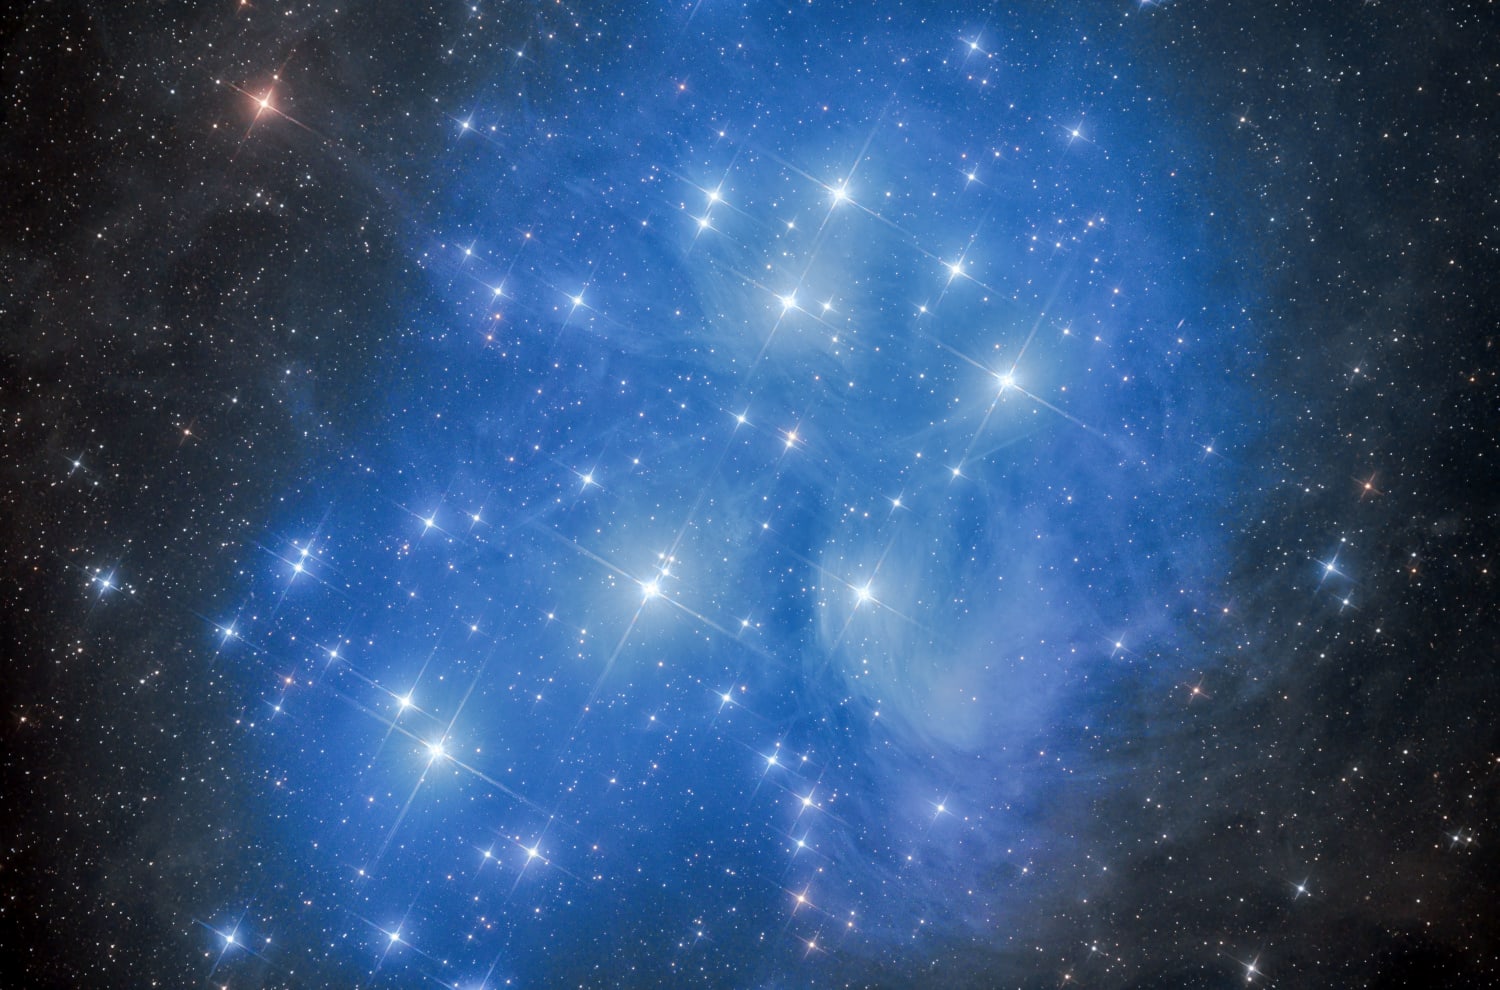 Pleiades Star Cluster (M45)